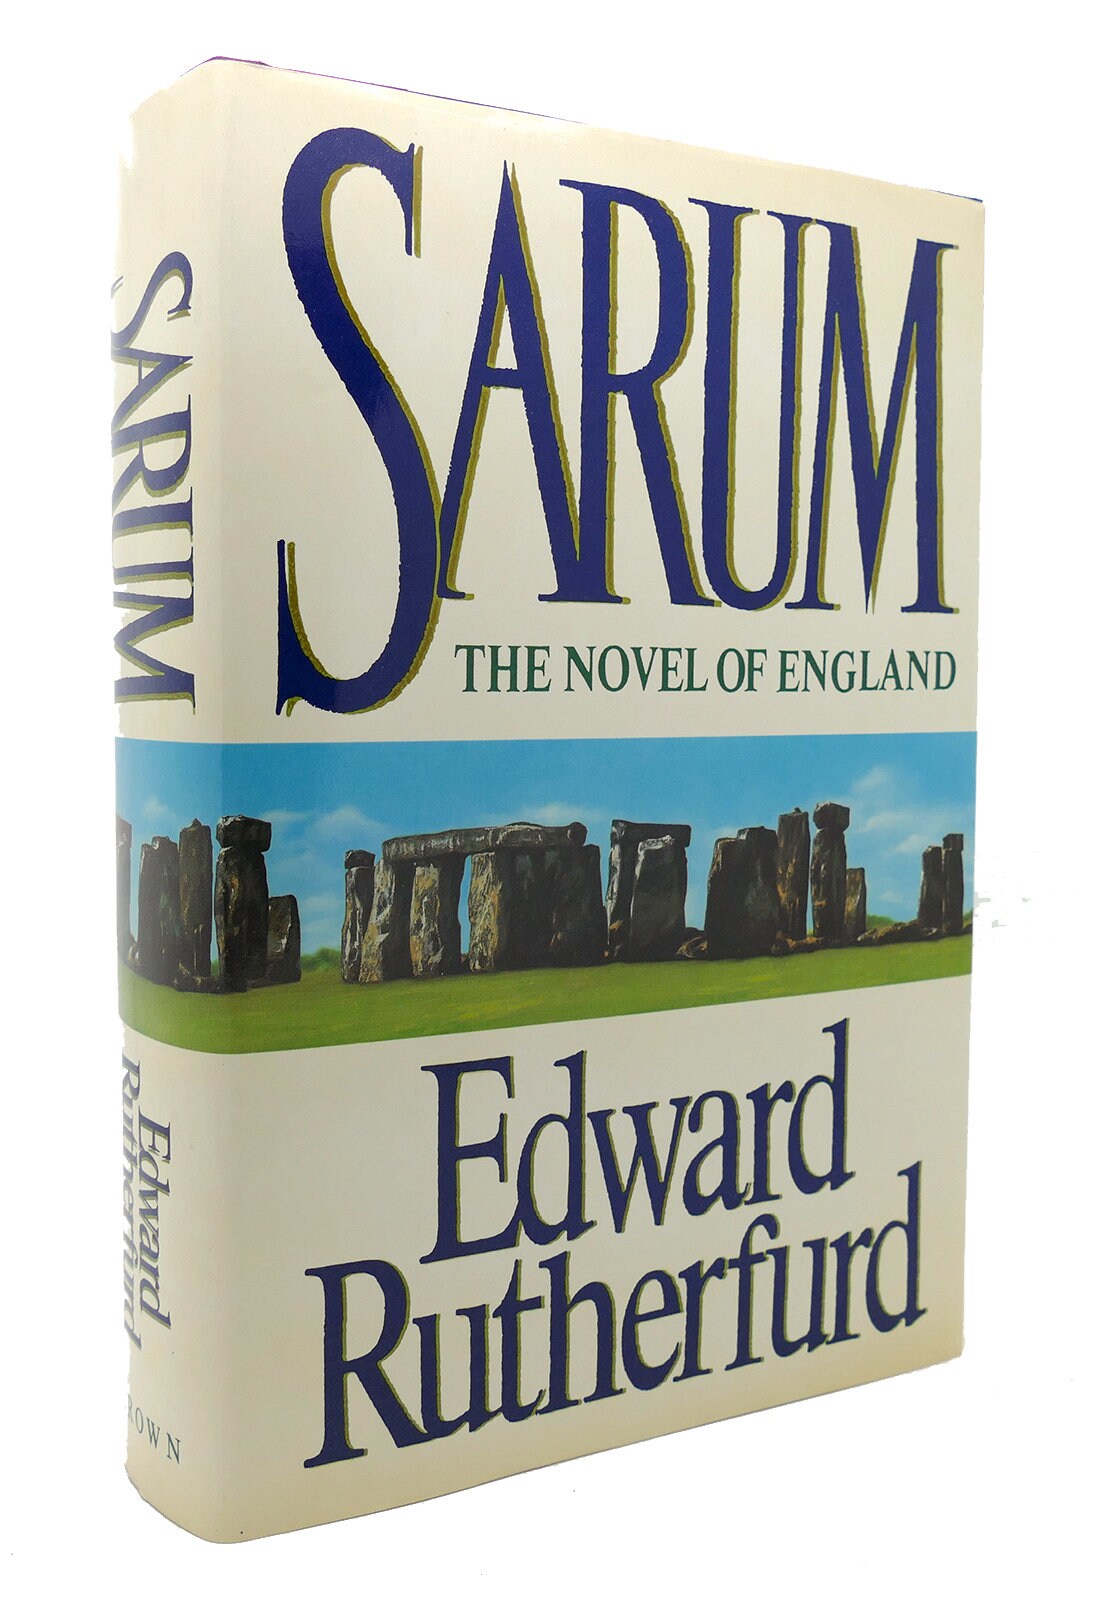 Sarum the Novel of England